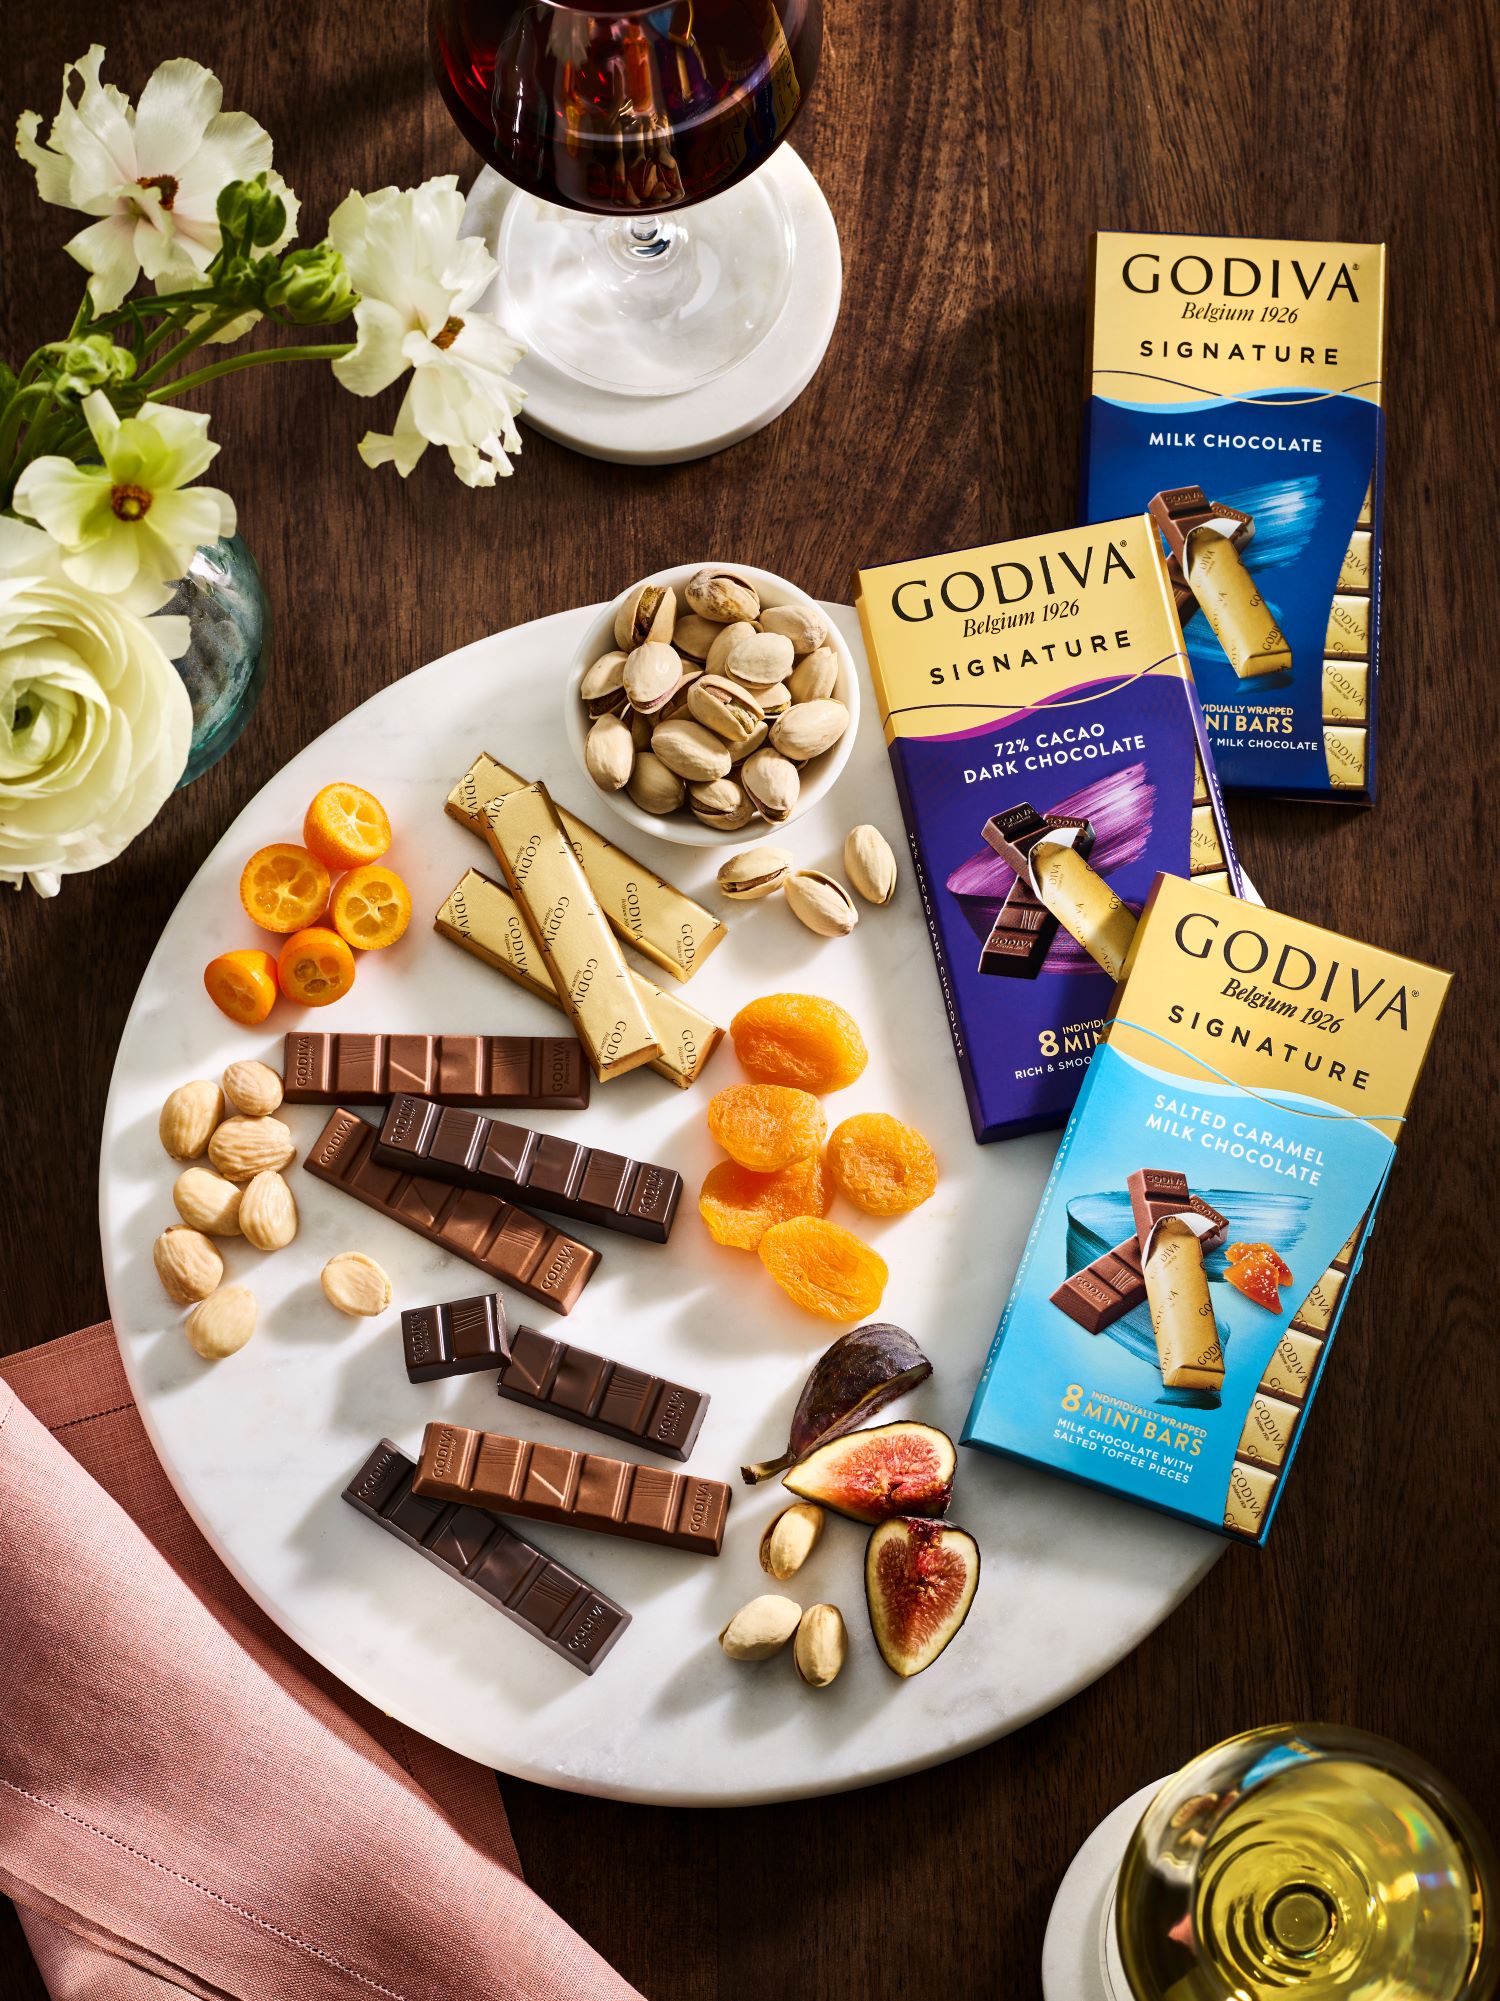 Godiva Signature Dark Chocolate, 8 Mini Bars, 3.1 oz - image 4 of 6